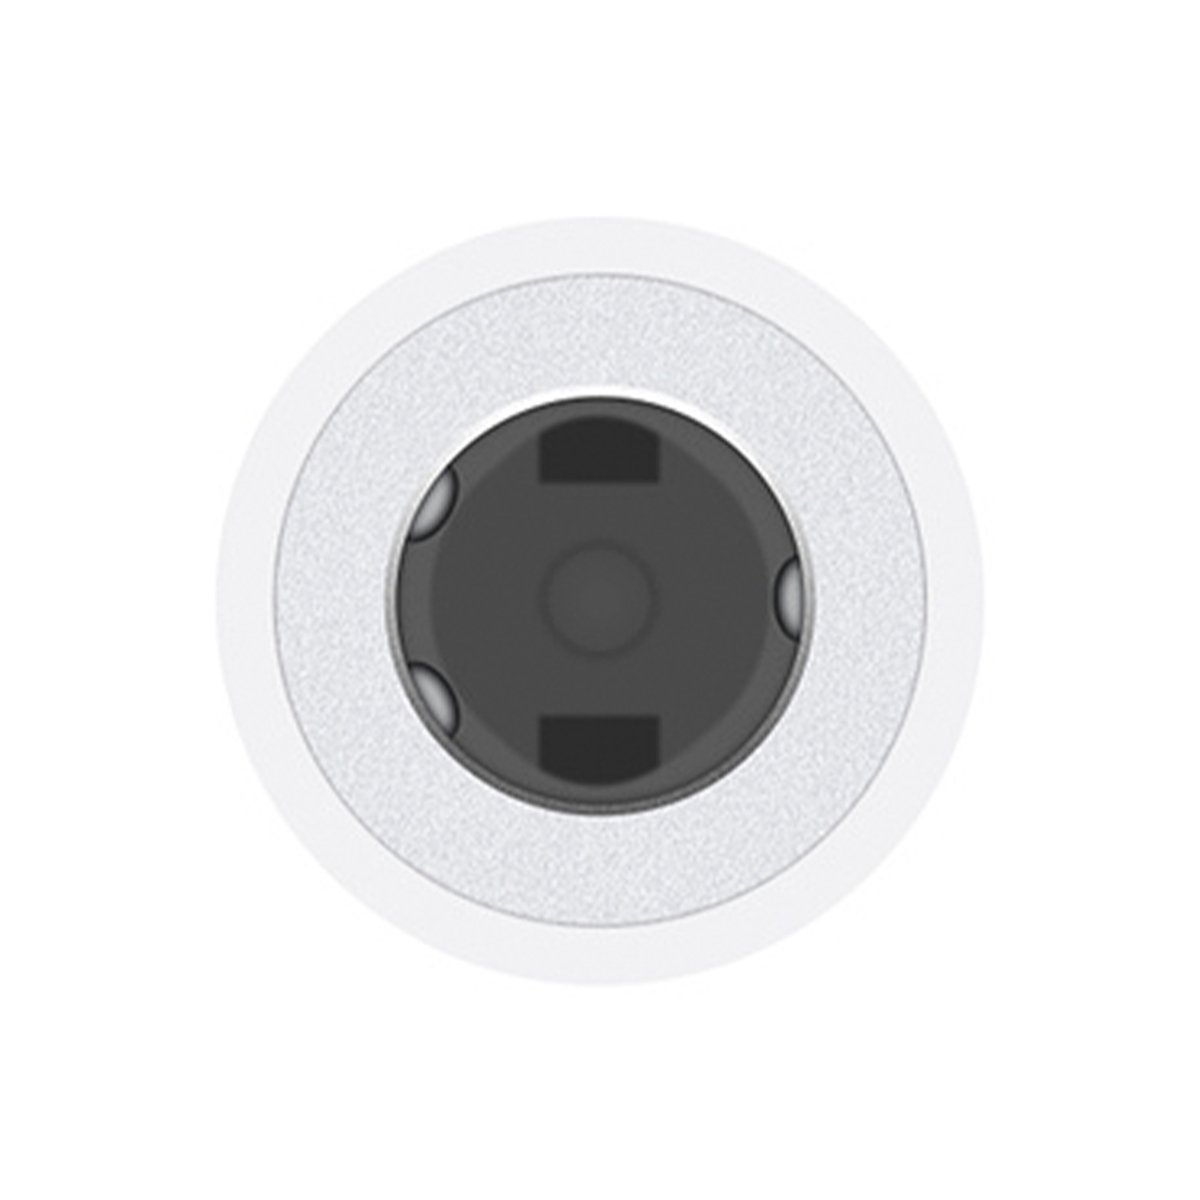 Apple USB-C to 3.5 mm Headphone Jack Adapter (MU7E2ZM/A)